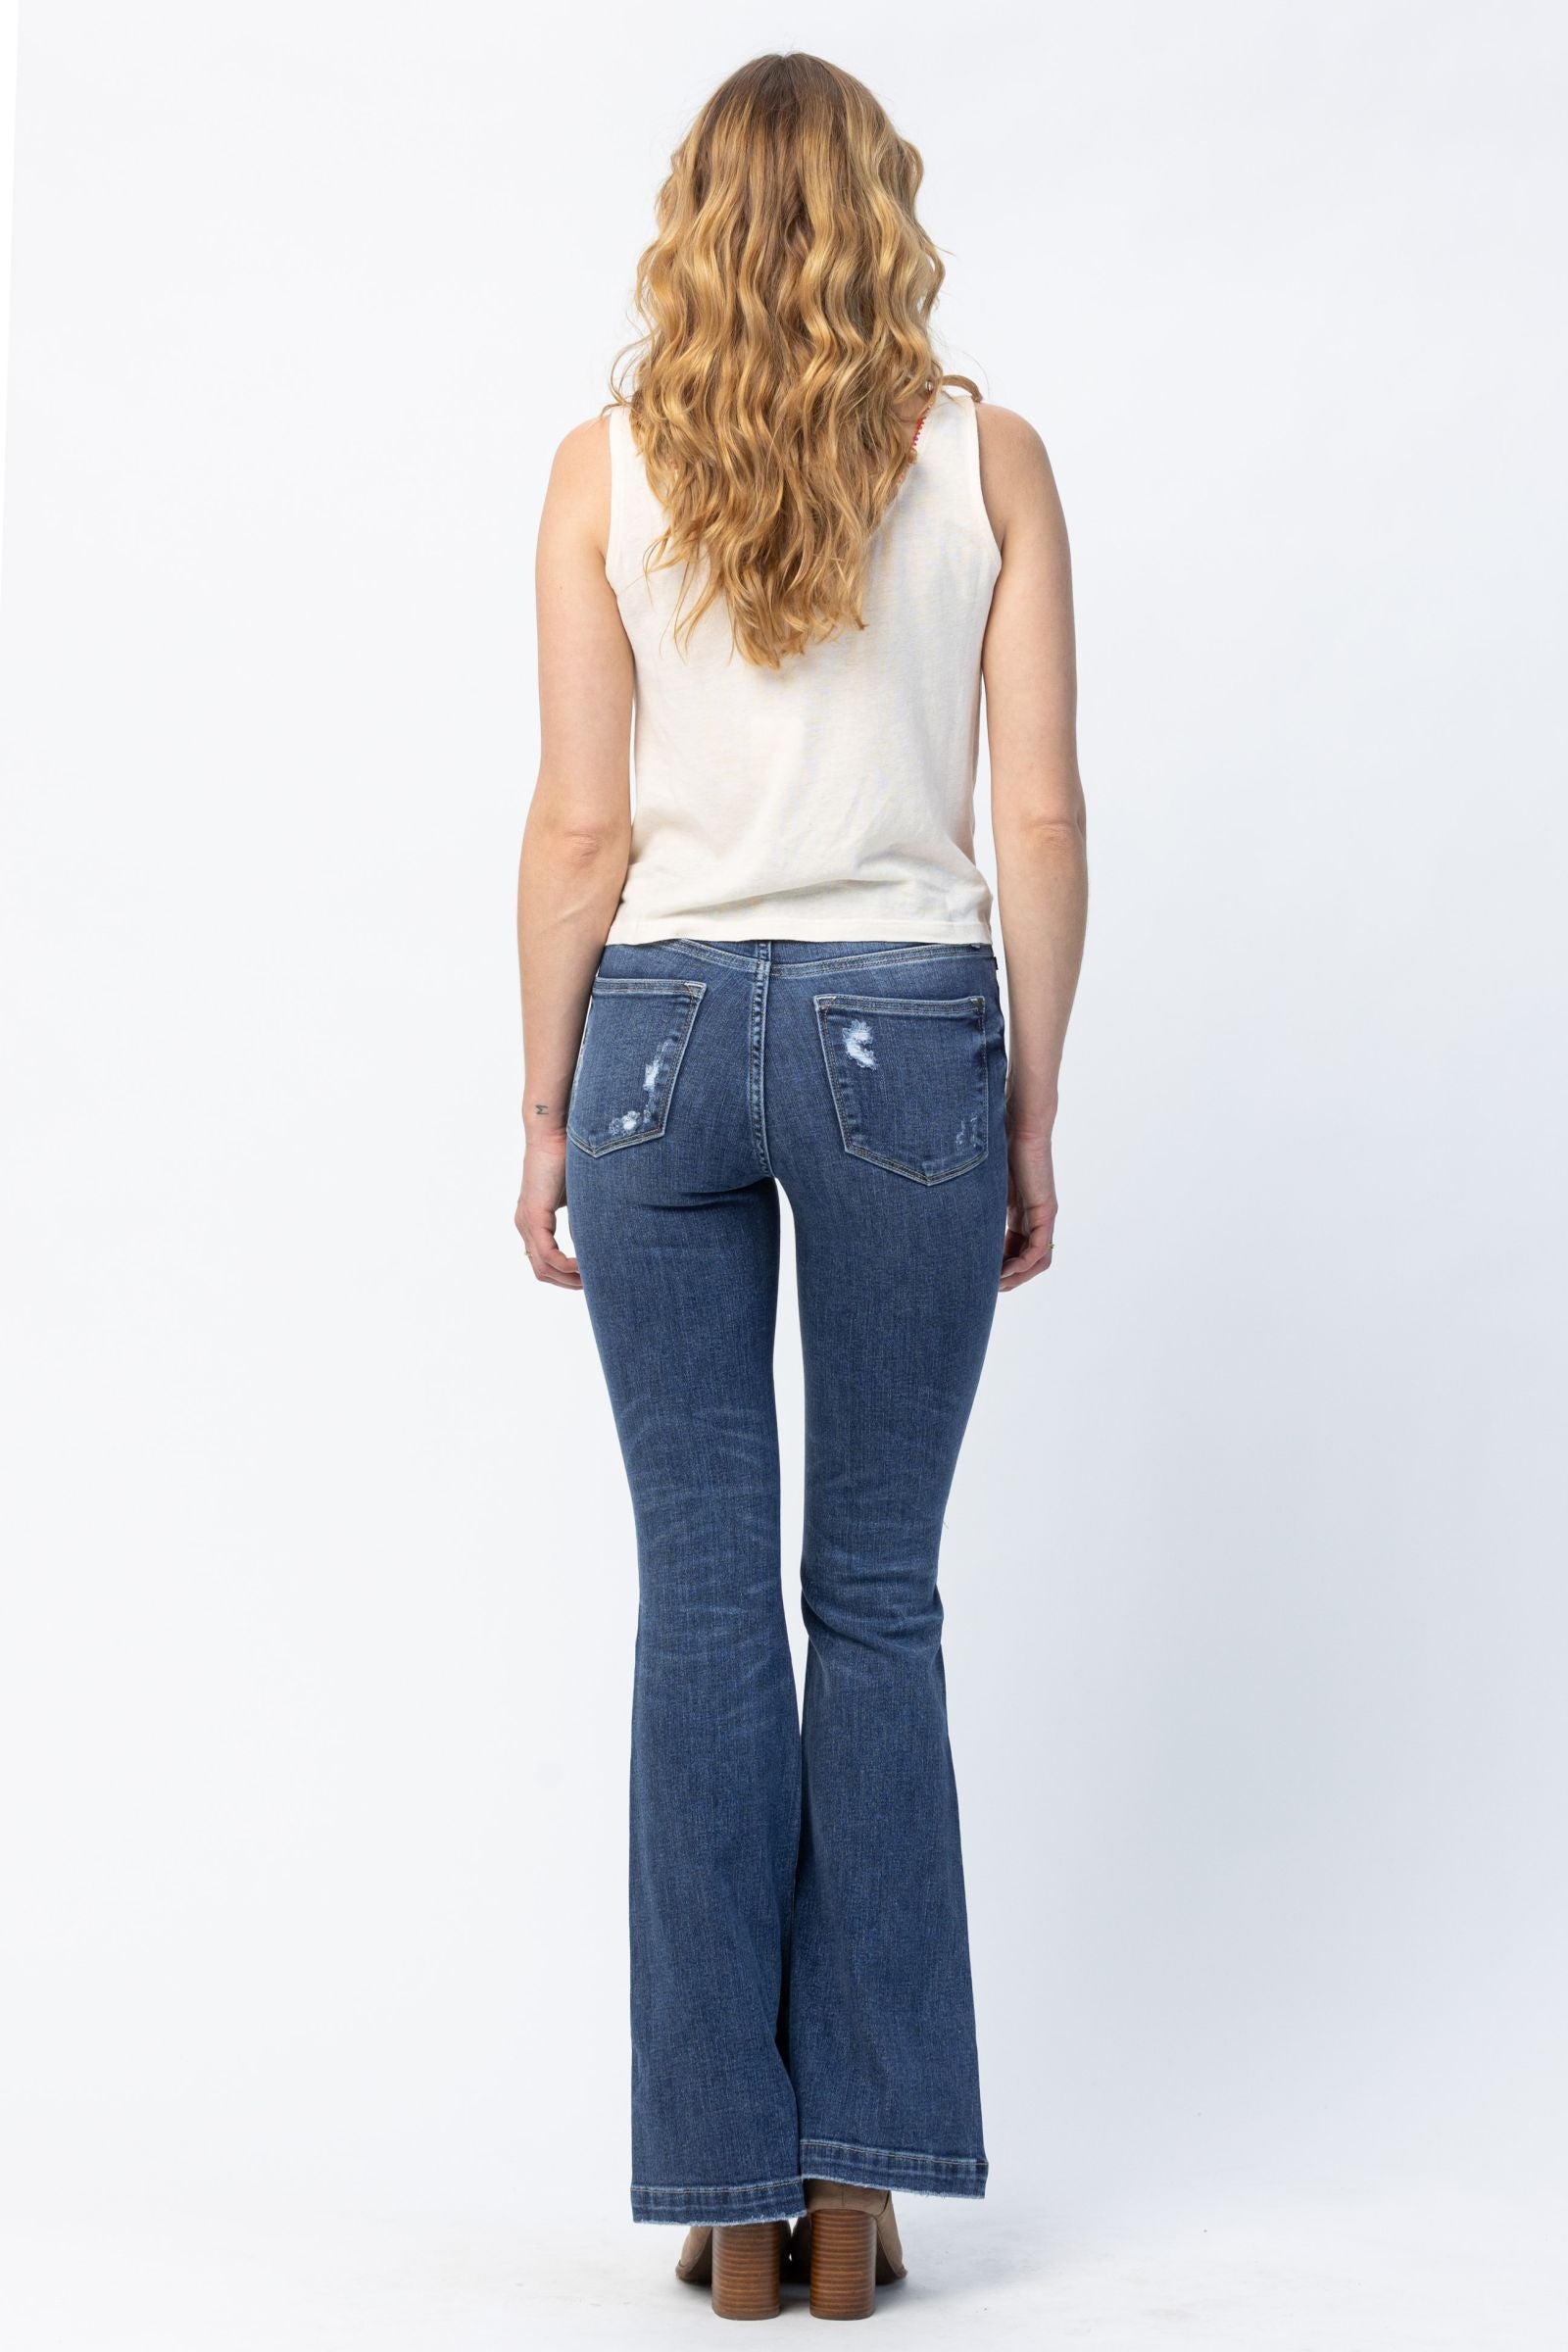 Judy Blue® IVY Jeans